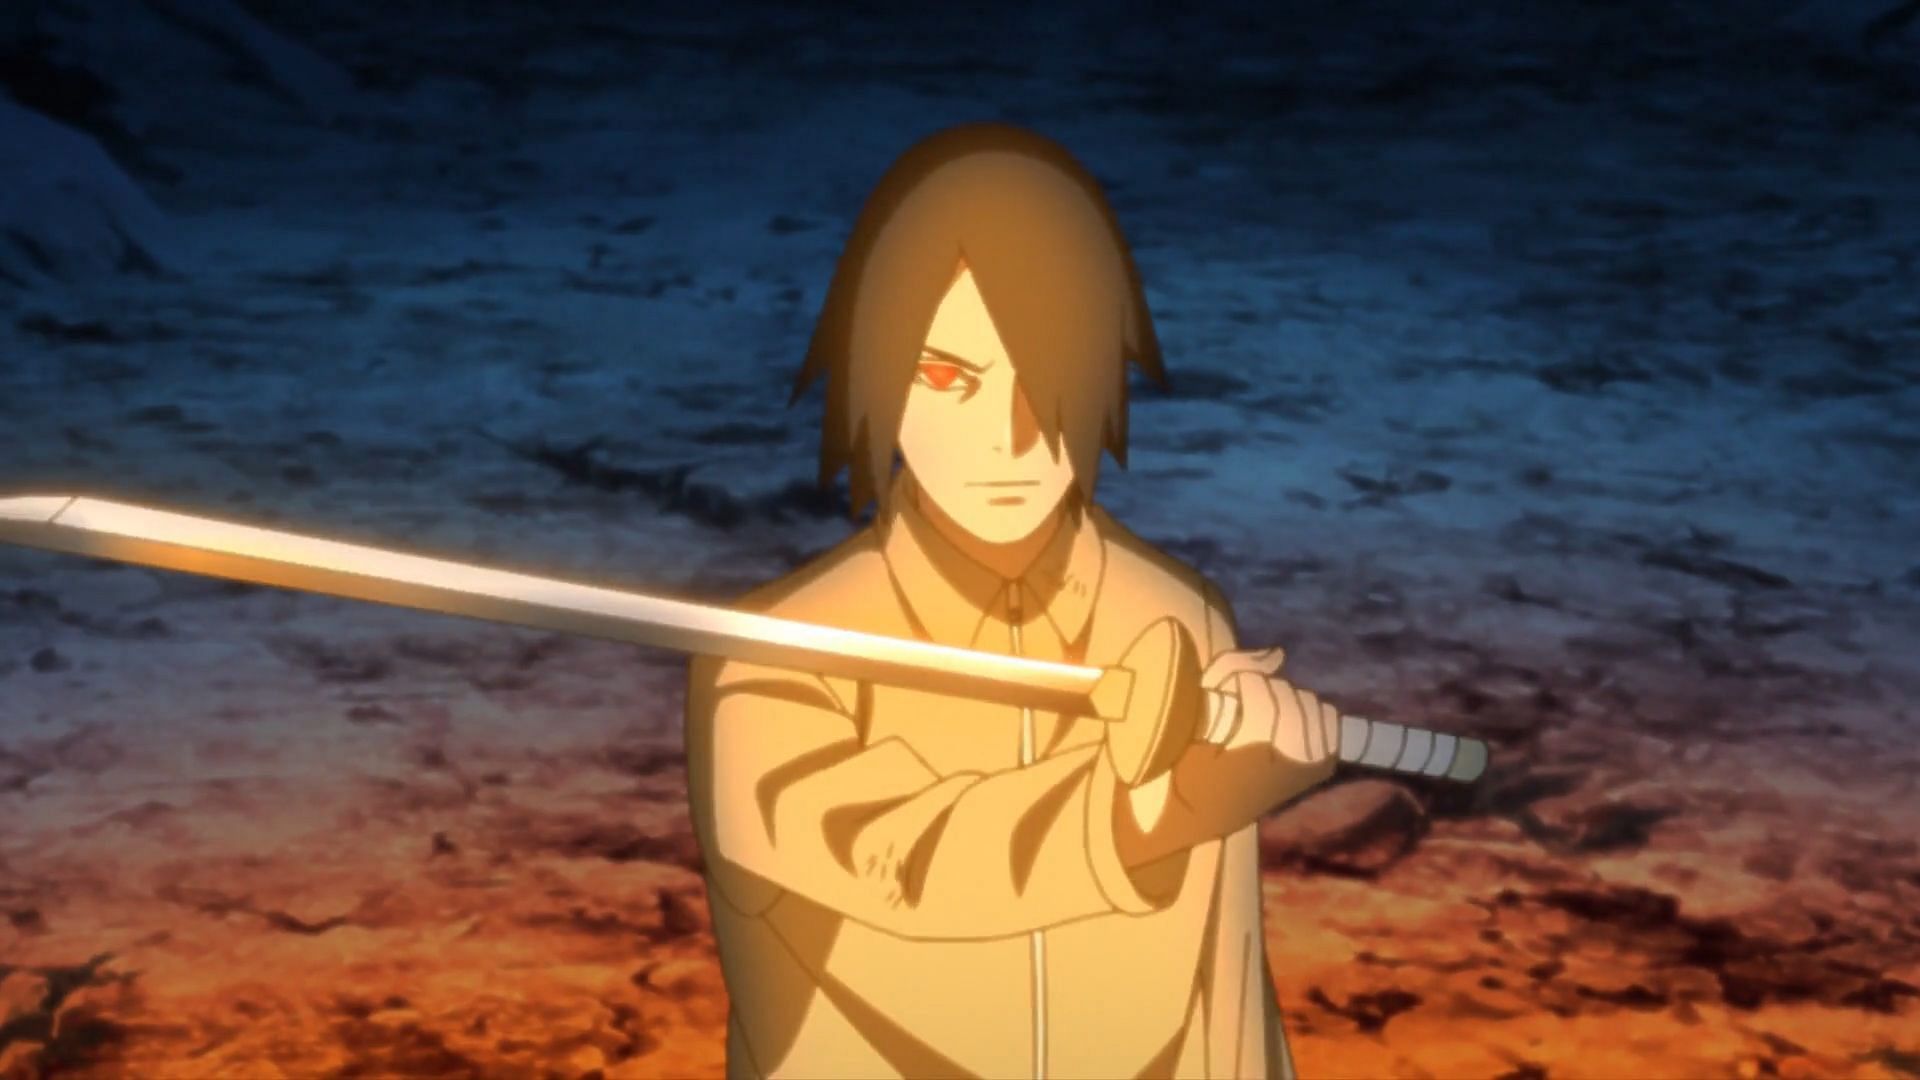 Boruto anime accidentally gives Sasuke strong healing powers